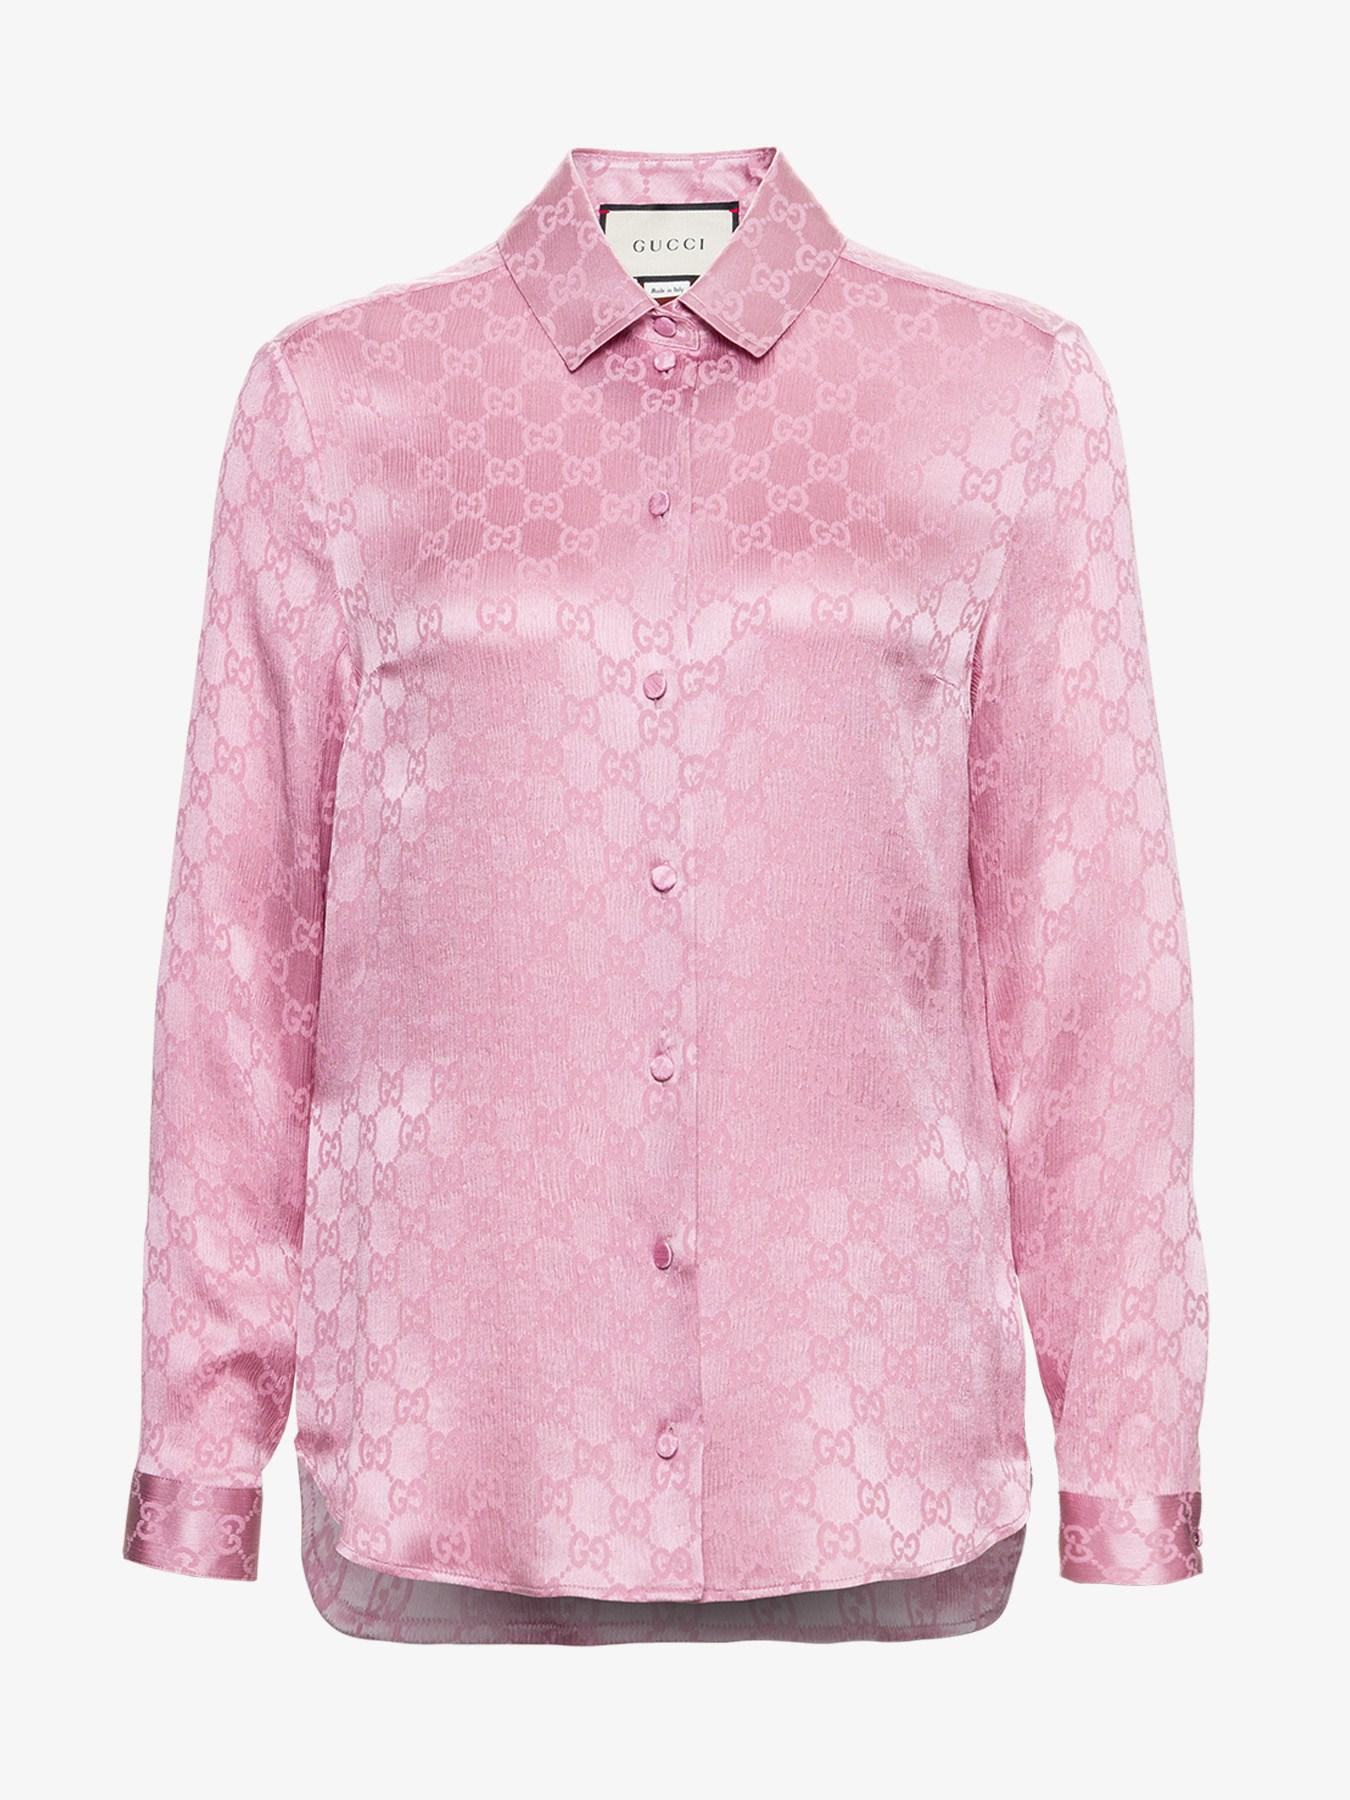 Gucci Crêpe De Chine Silk Shirt in Pink - Lyst